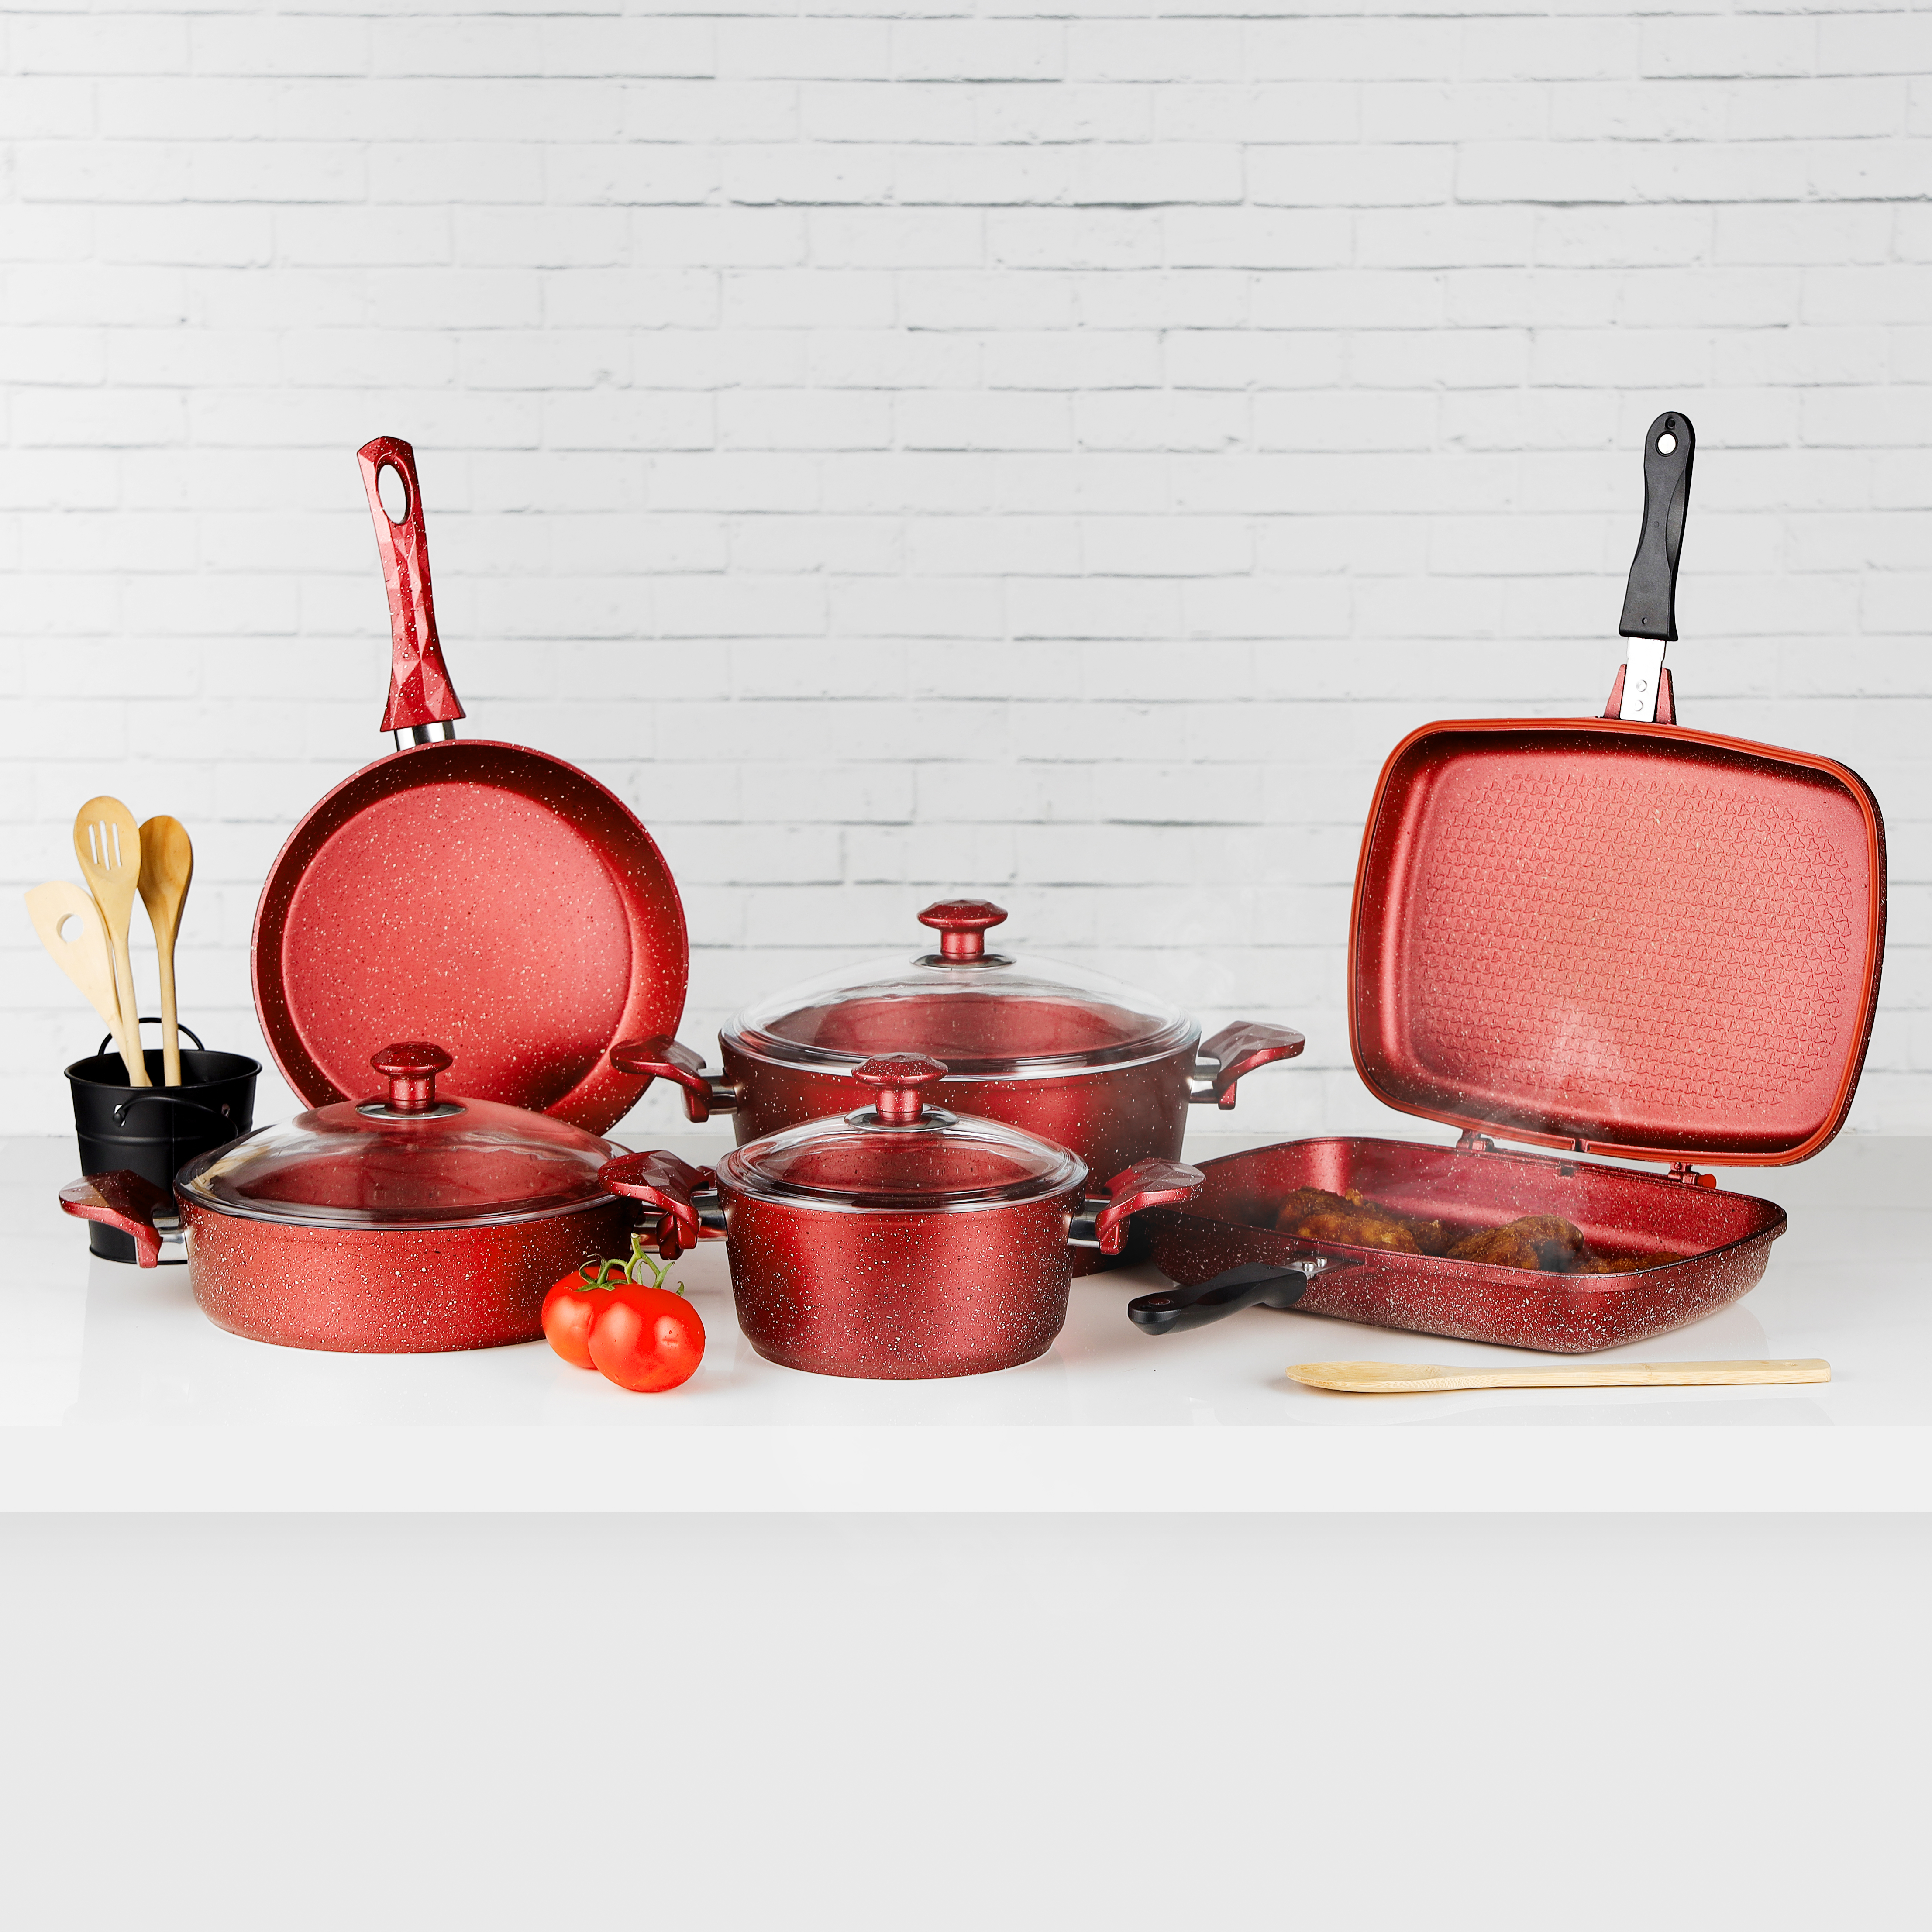 Legend Granite Chef 7pce Cookware Set for Sale ✔️ Lowest Price Guaranteed